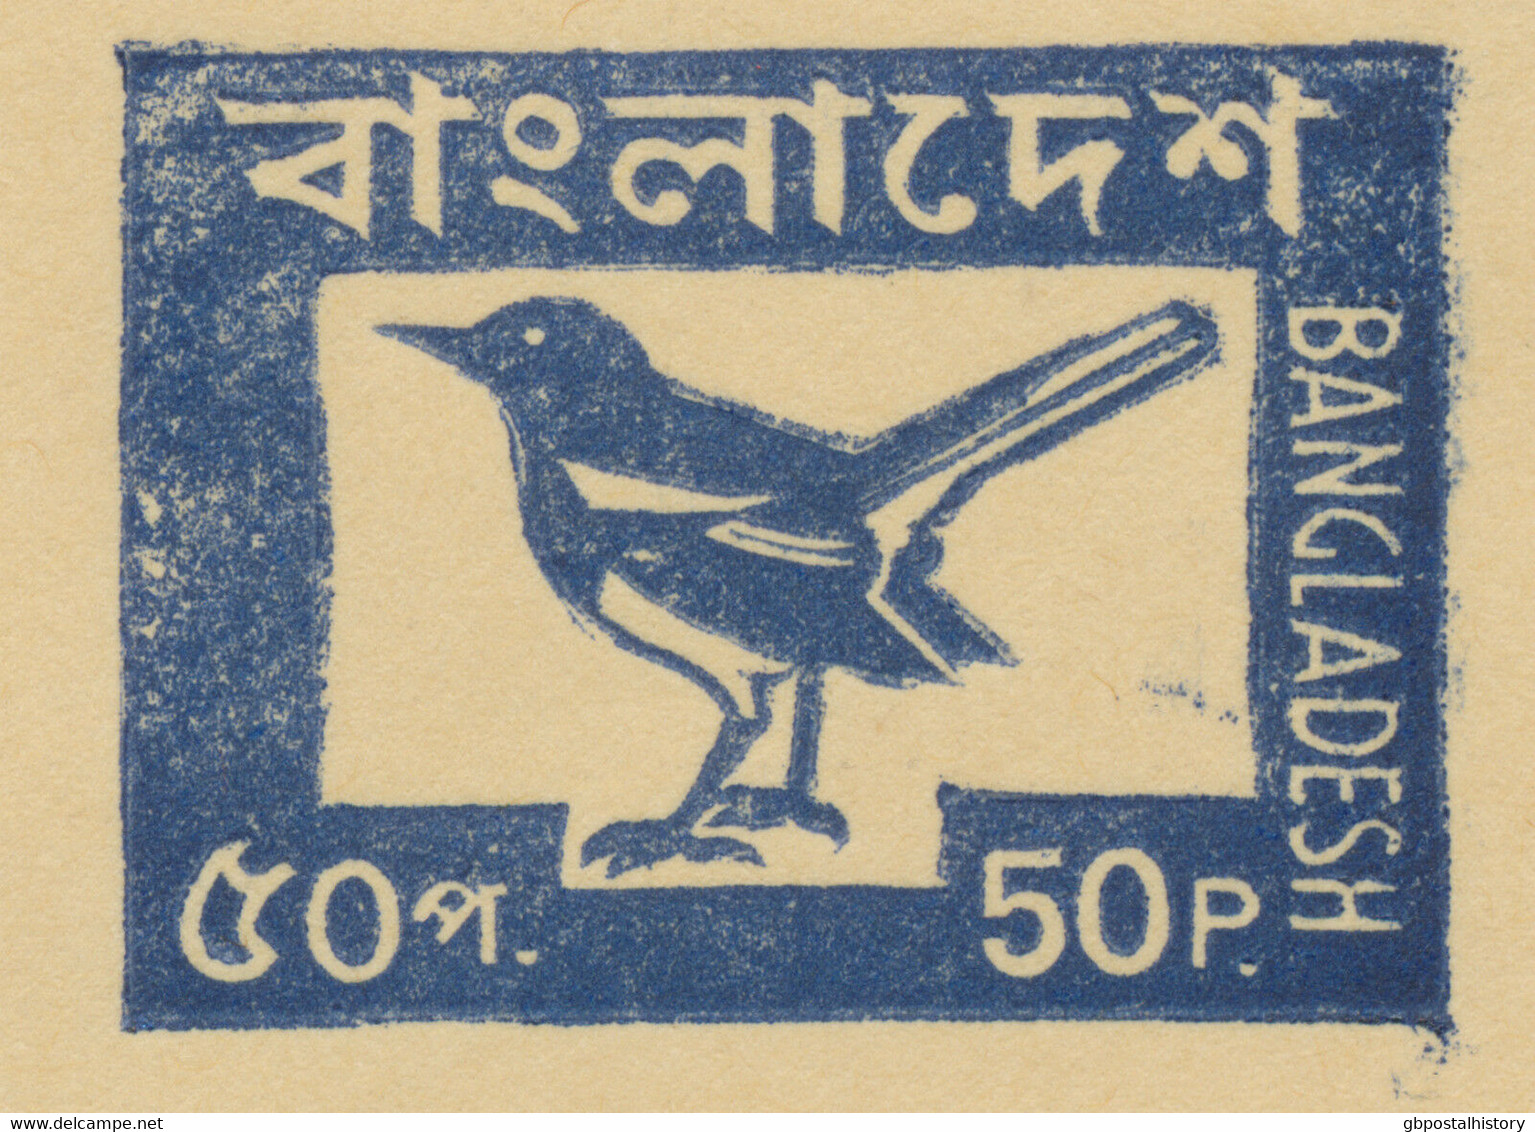 BANGLADESH 1983 „Doyel“ Birds Issue 50 P Navy Blue On Cream, Very Fine U/M VARIETY - Bangladesch